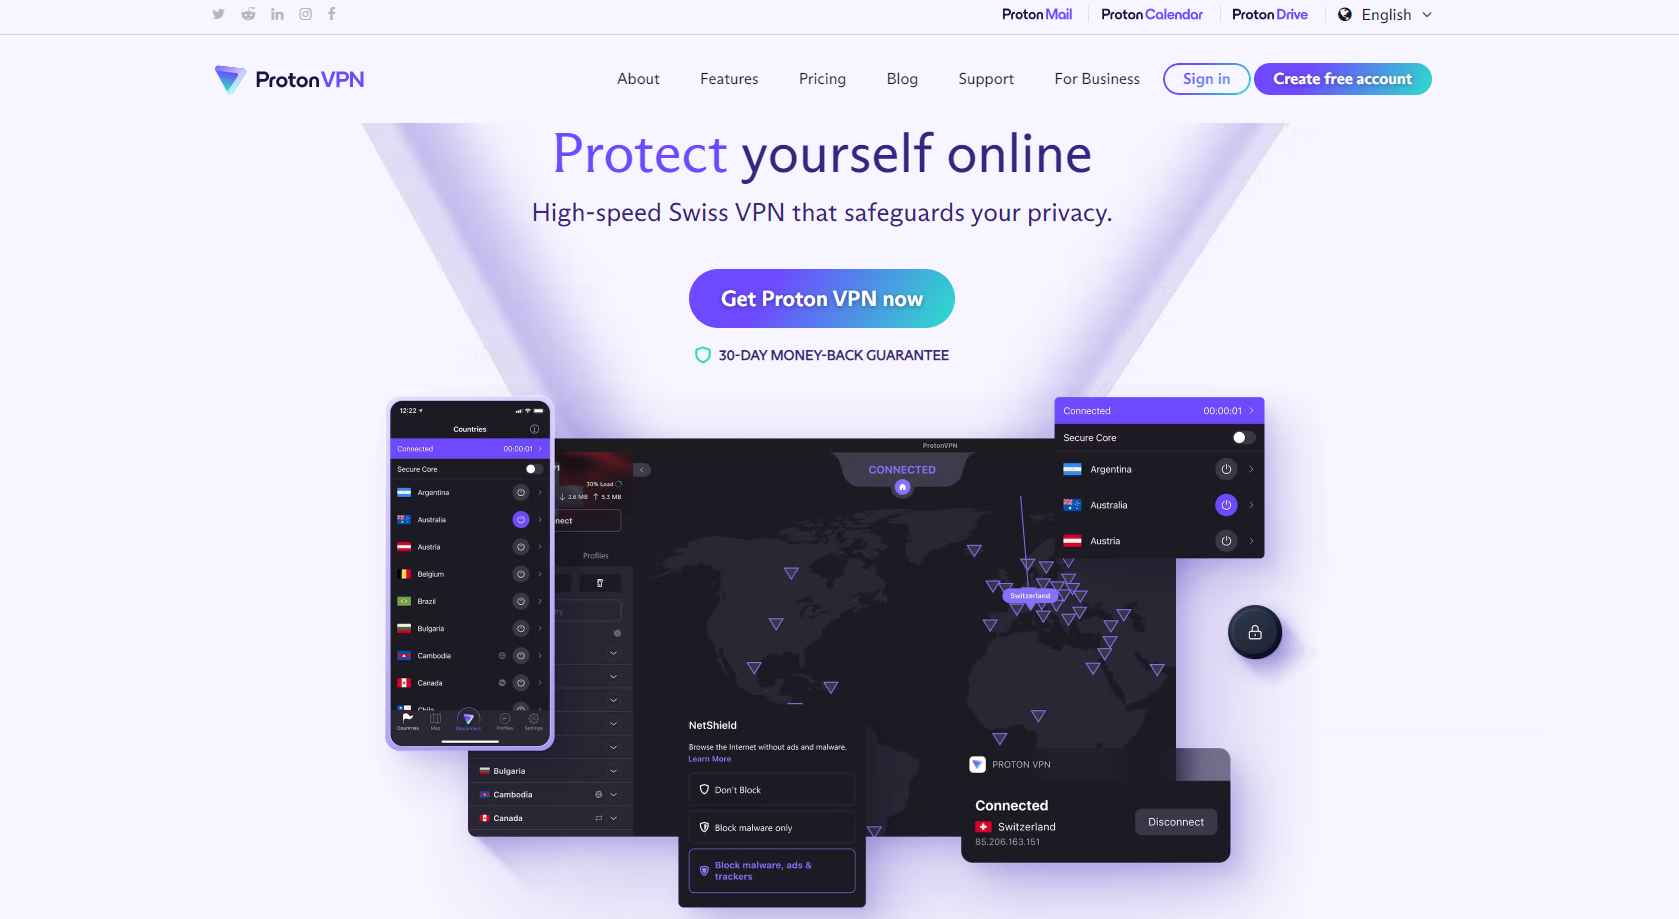 ProtonVPN Homepage